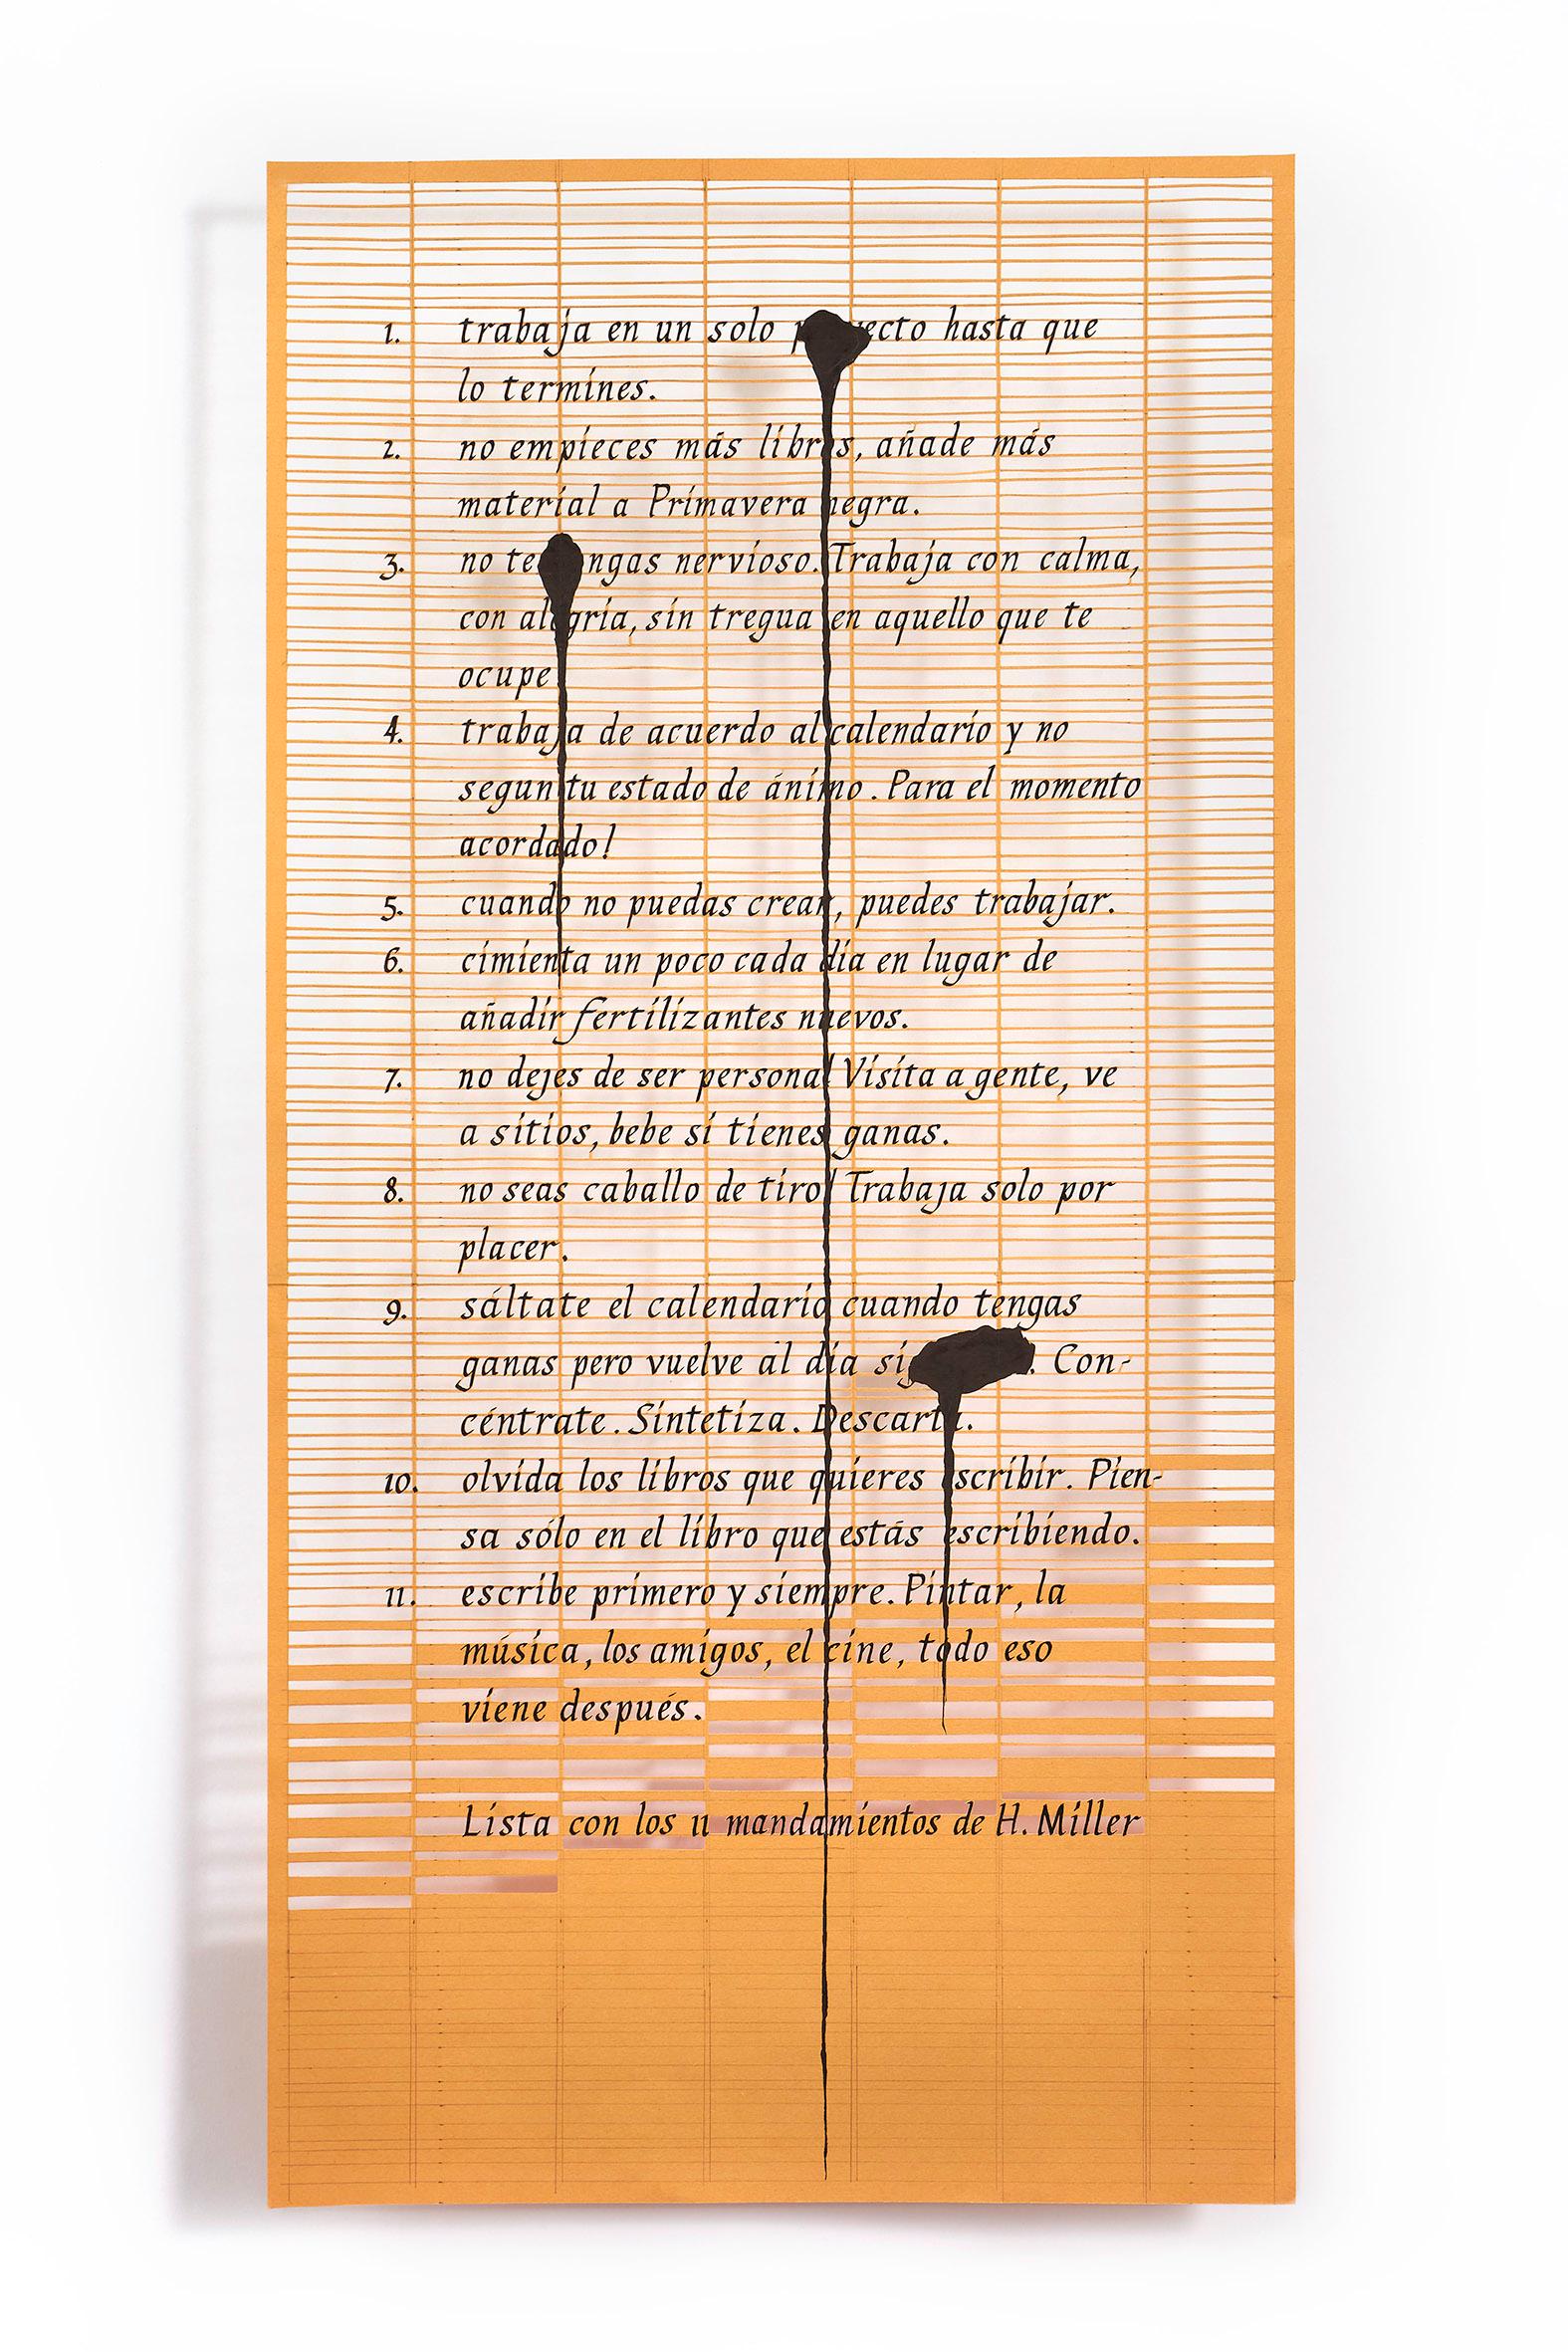 Lista de Henry Miller - Mixed Media Art by Pablo Lehmann